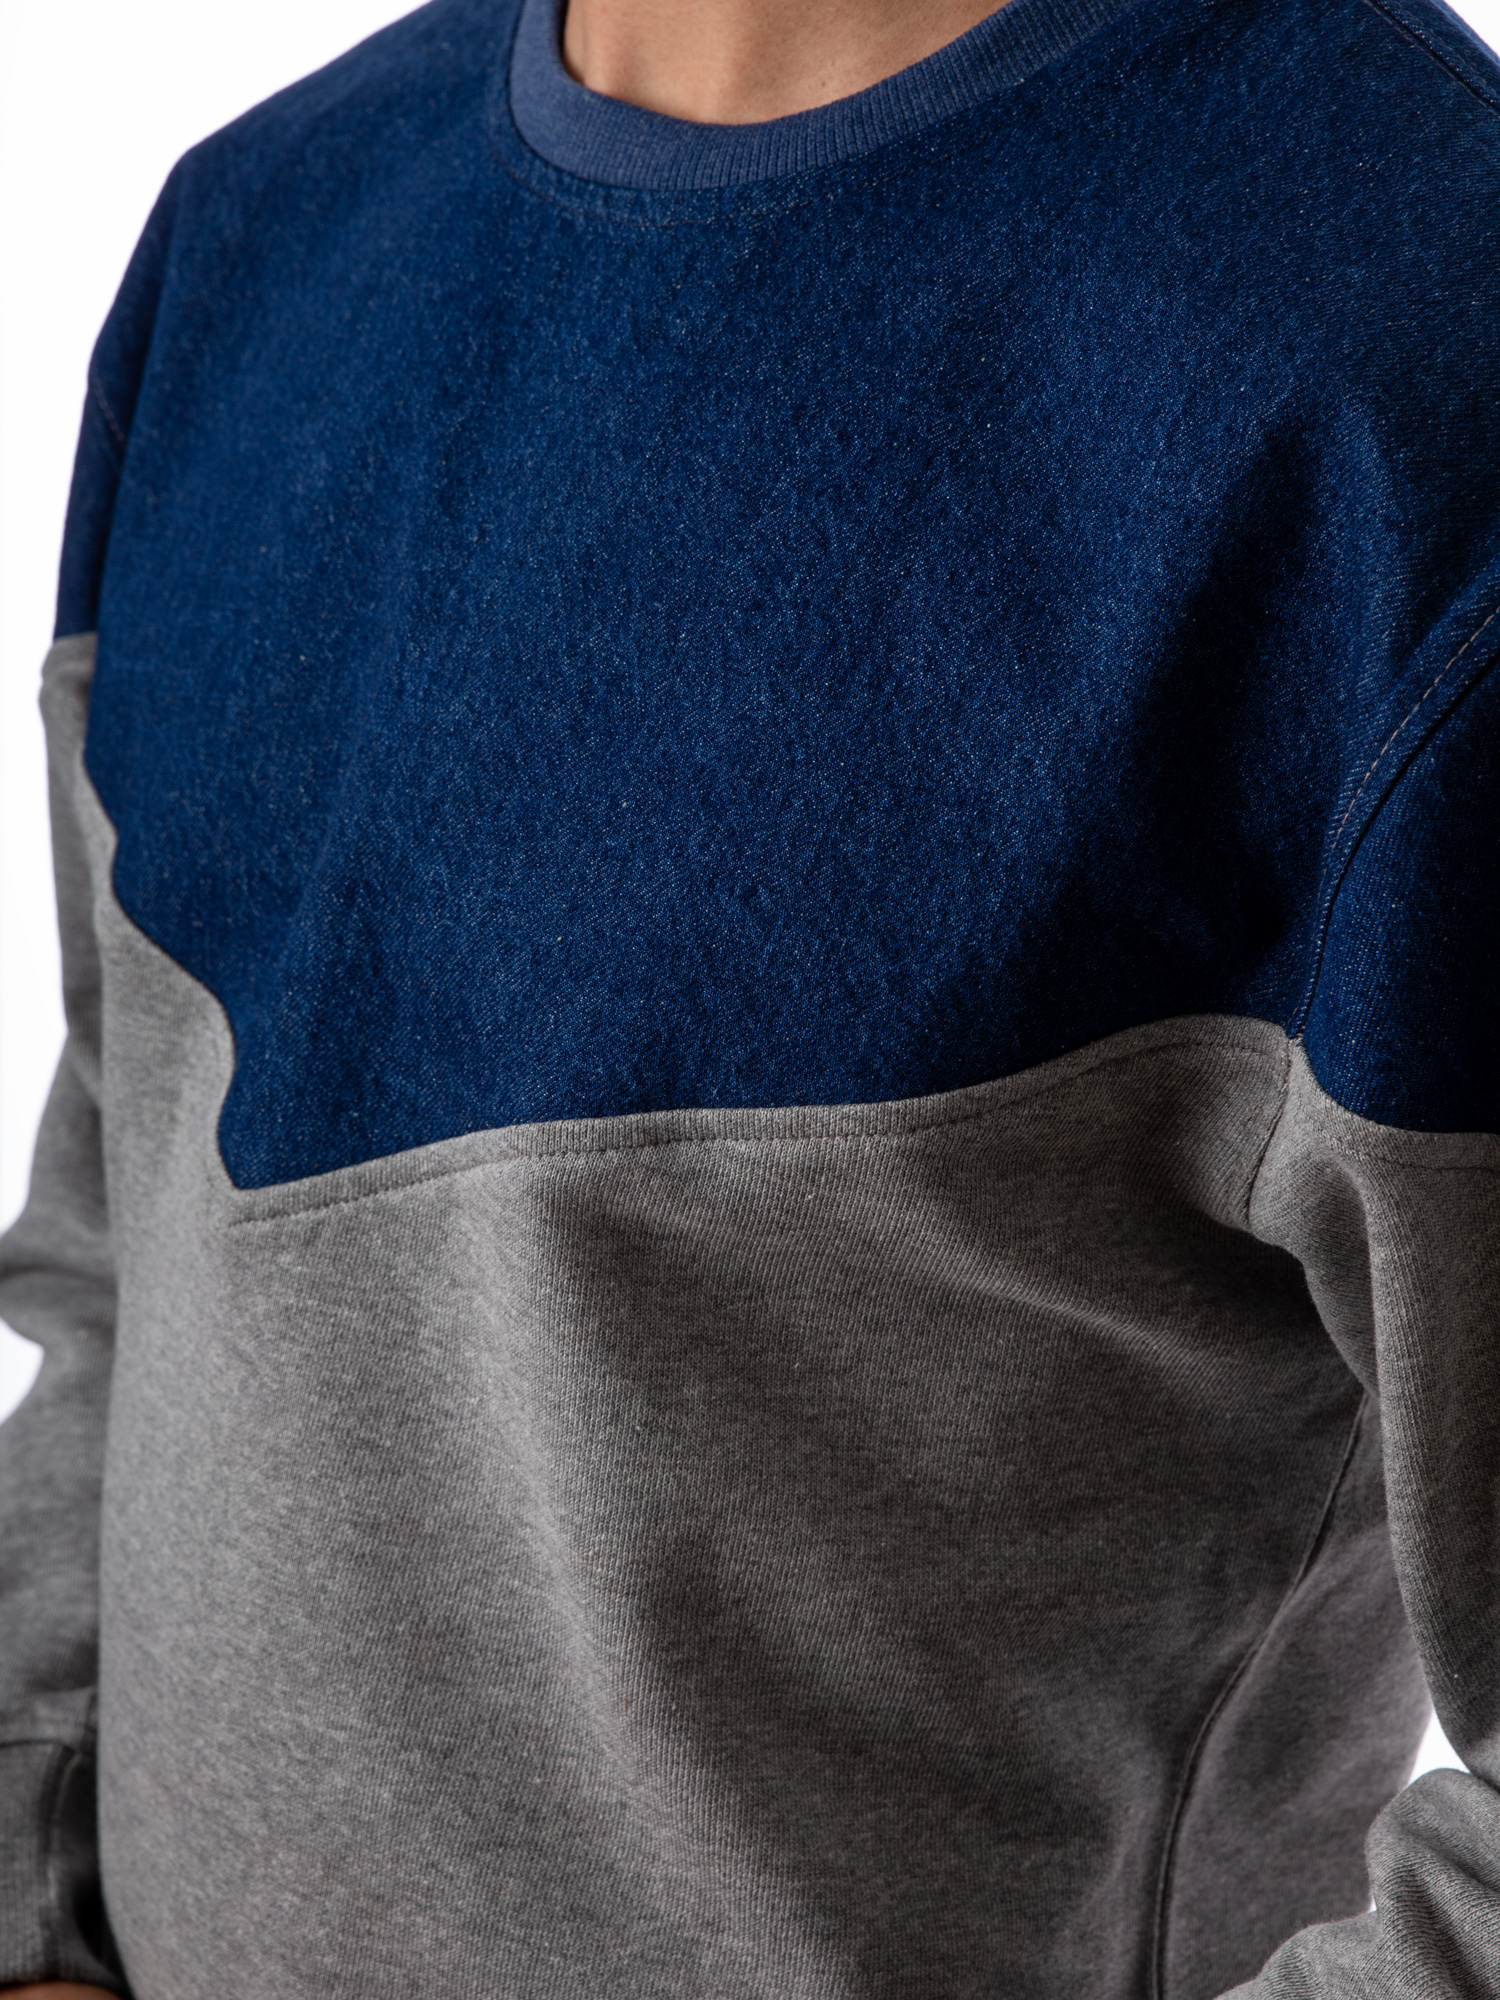 Jordache Vintage Men's Alen Yoke Pullover Sweatshirt, Sizes S-2XL - image 2 of 6